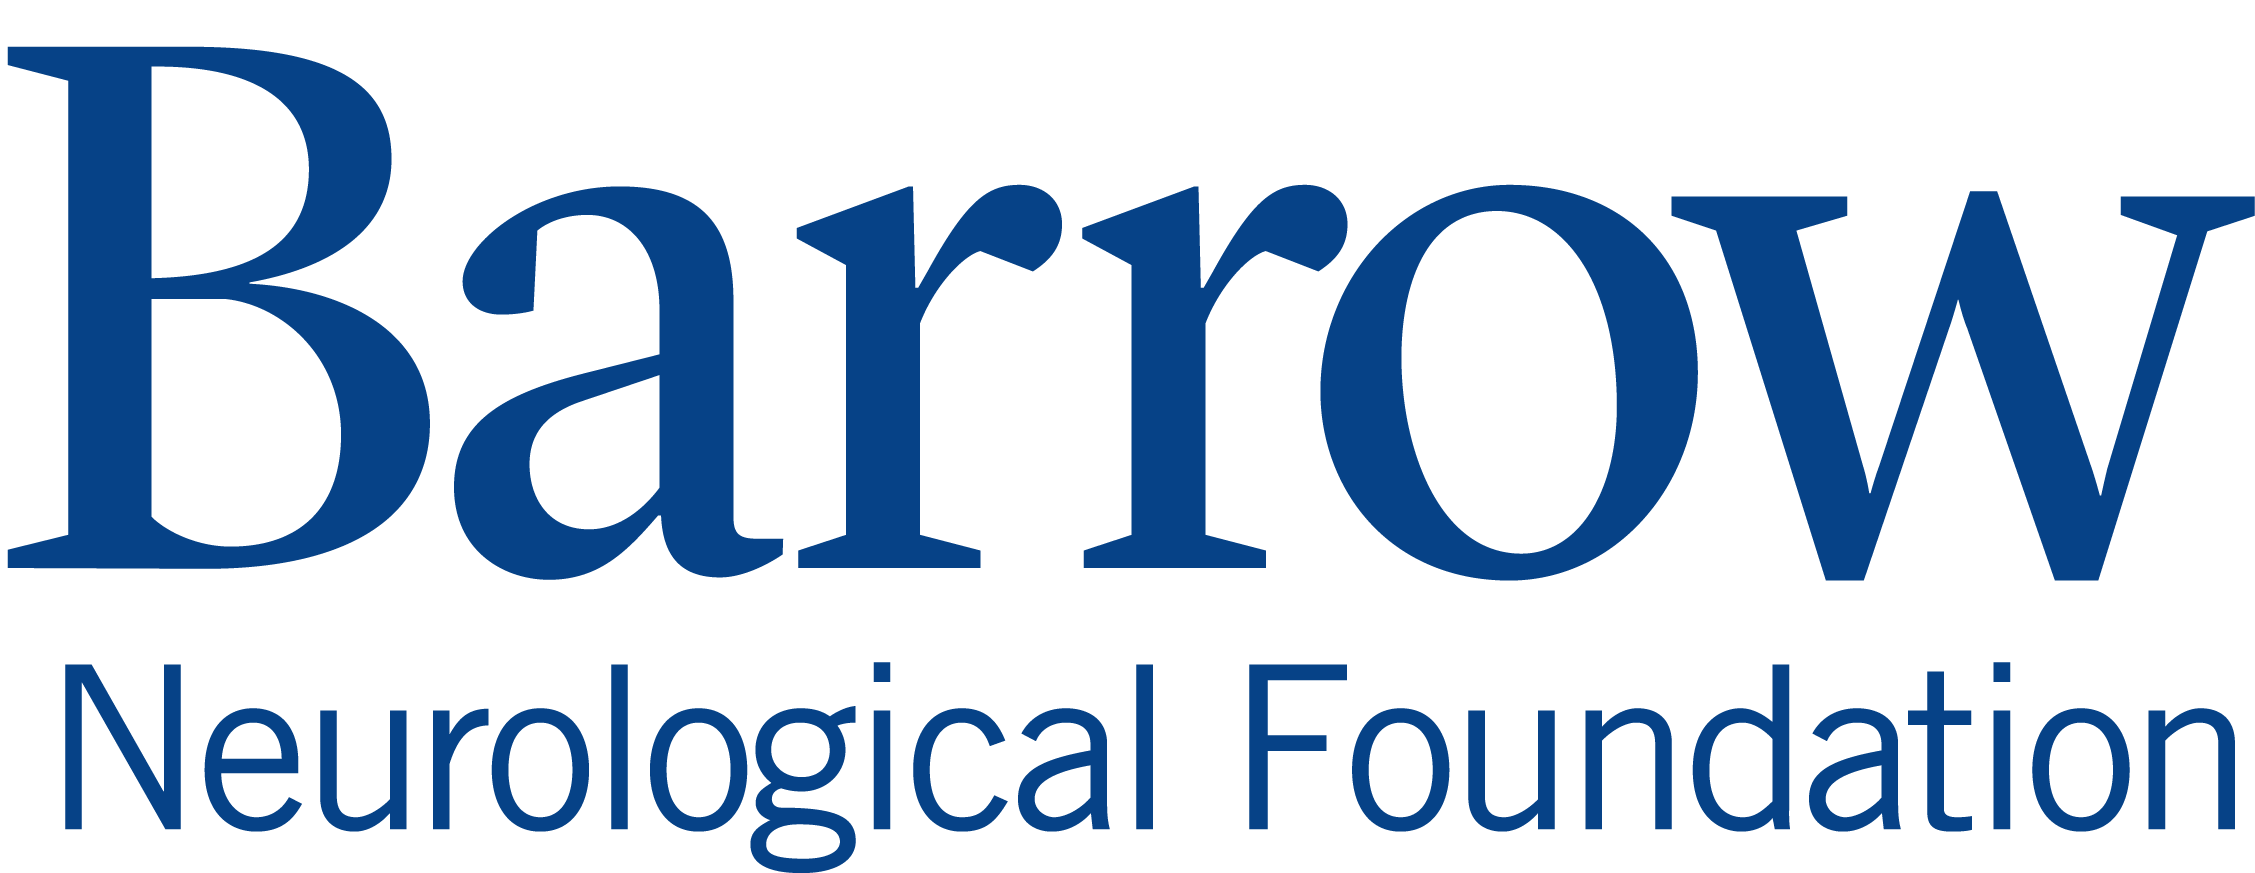 blue barrow neurological foundation